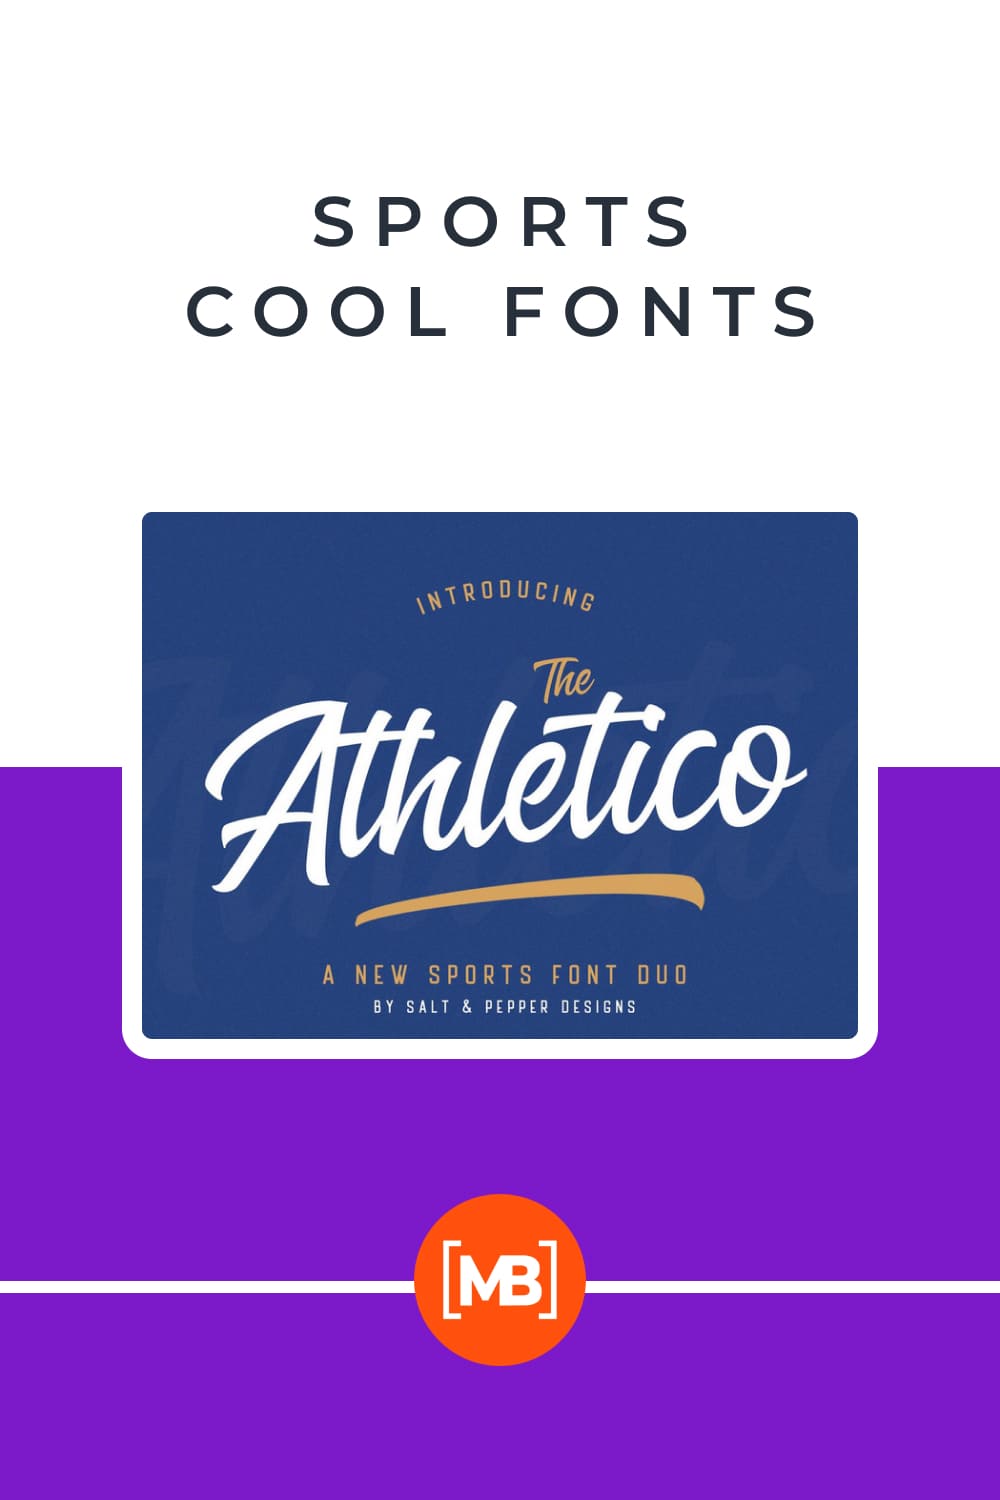 Nice and elegant sports font.